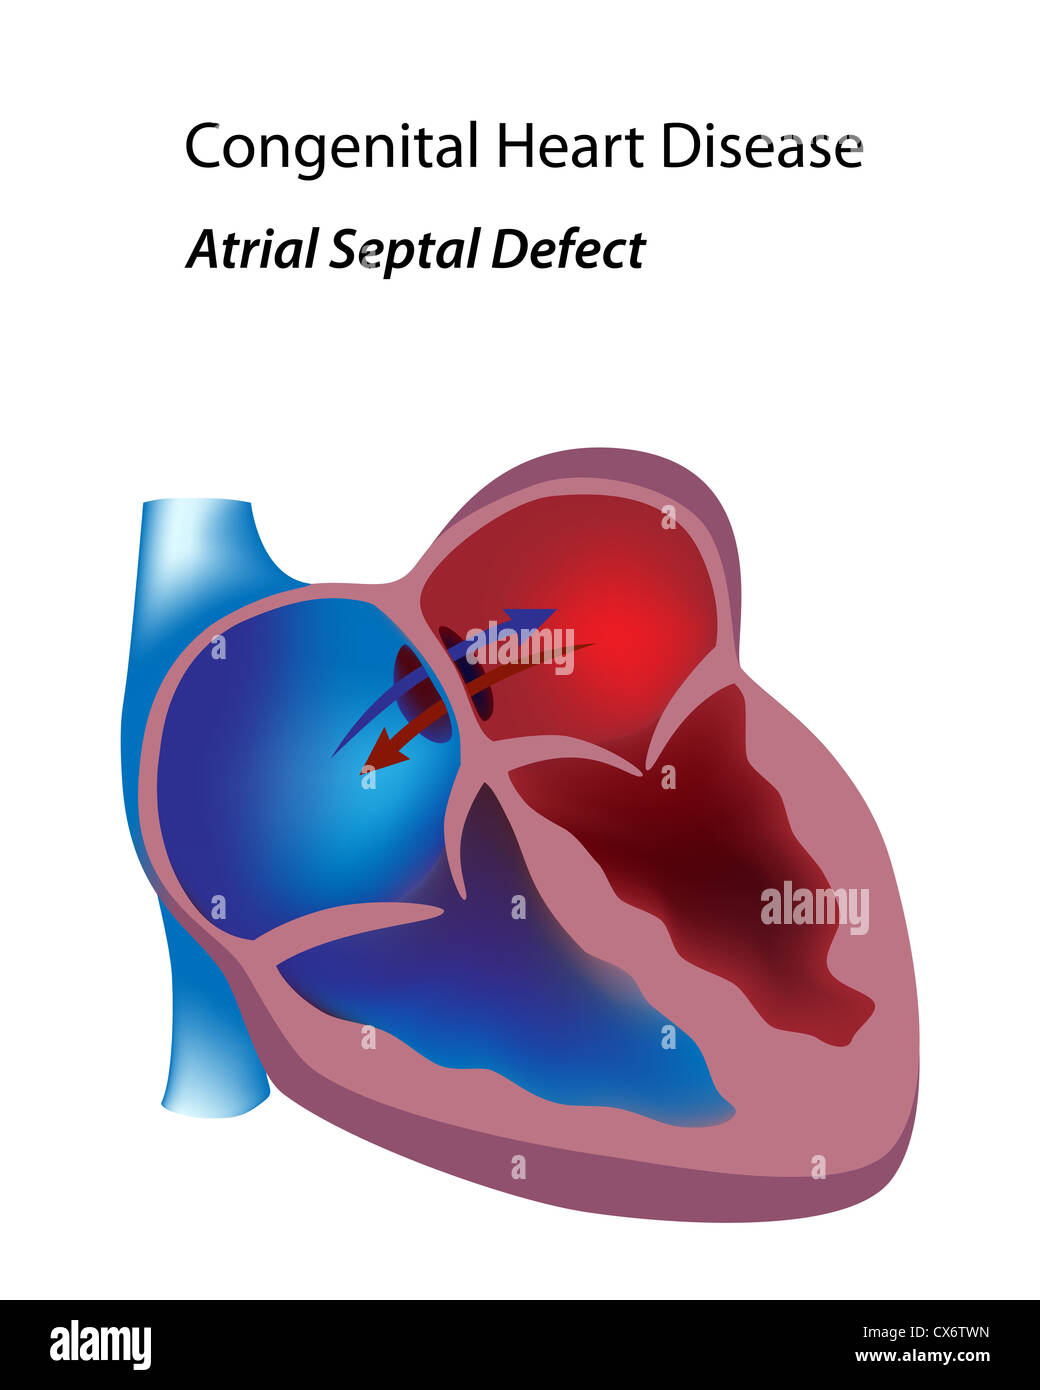 Congenital heart disease: atrial septal defect Stock Photo